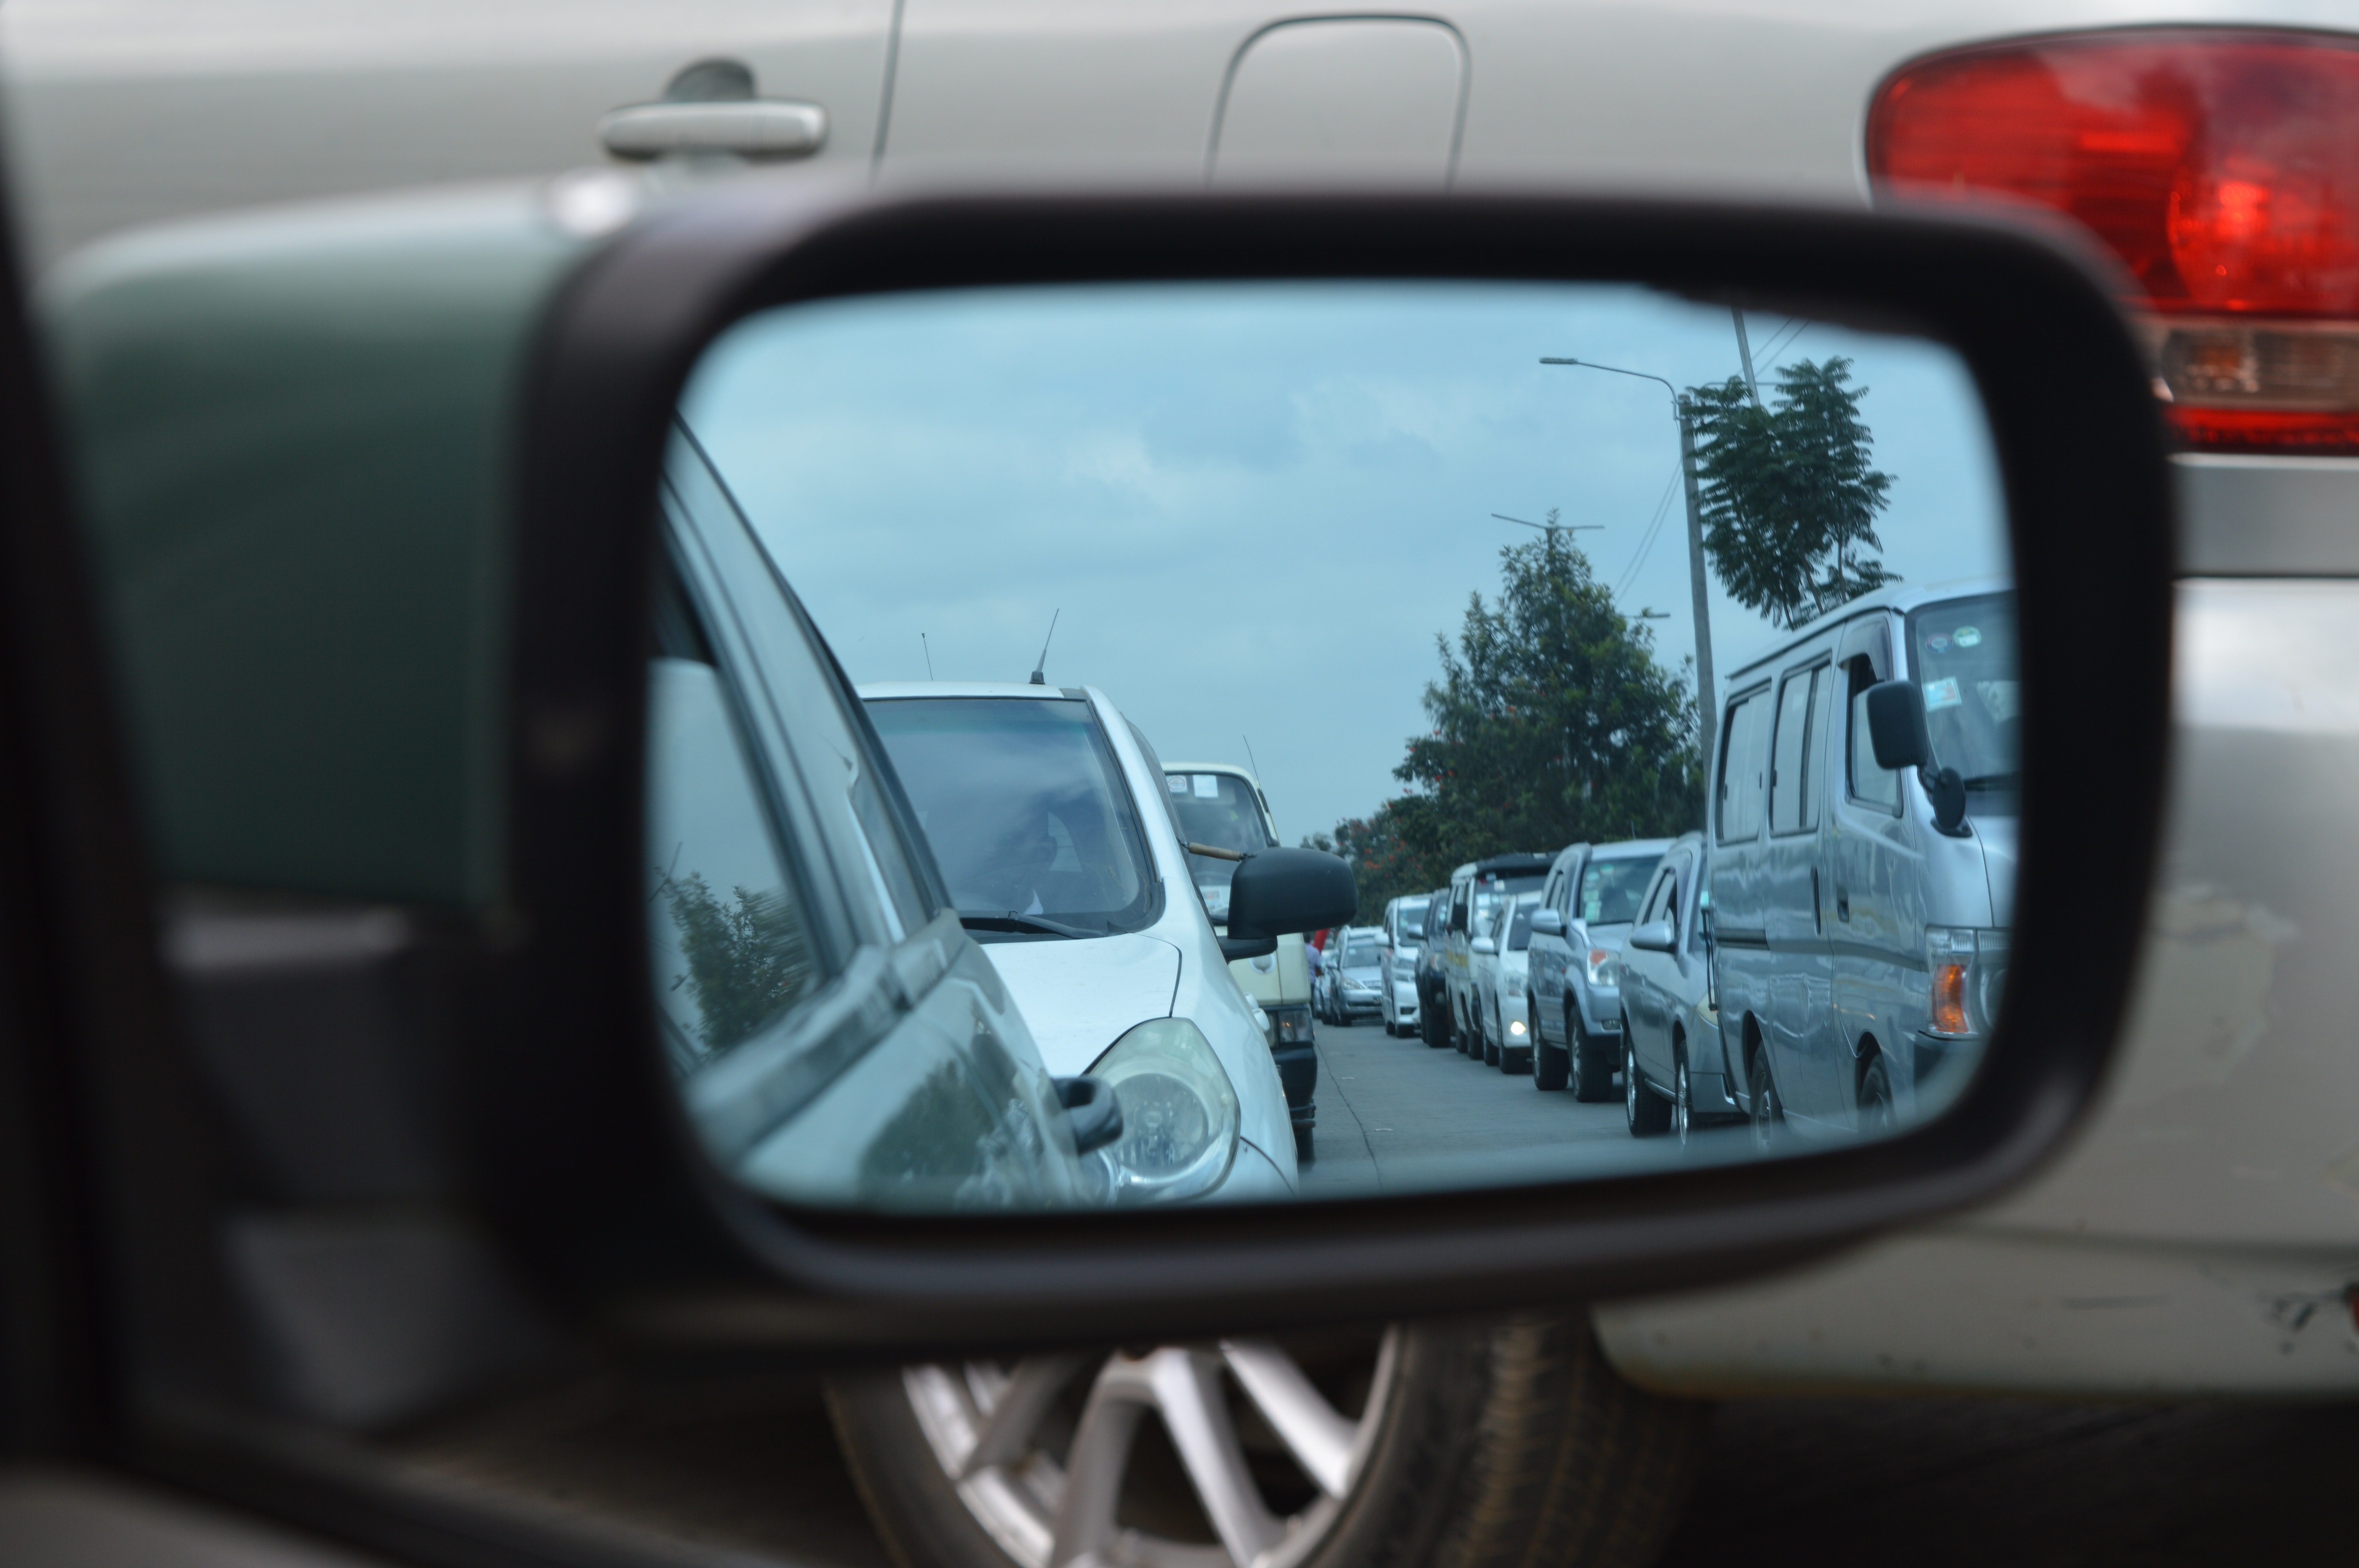 Car side mirror showing heavy traffic photo